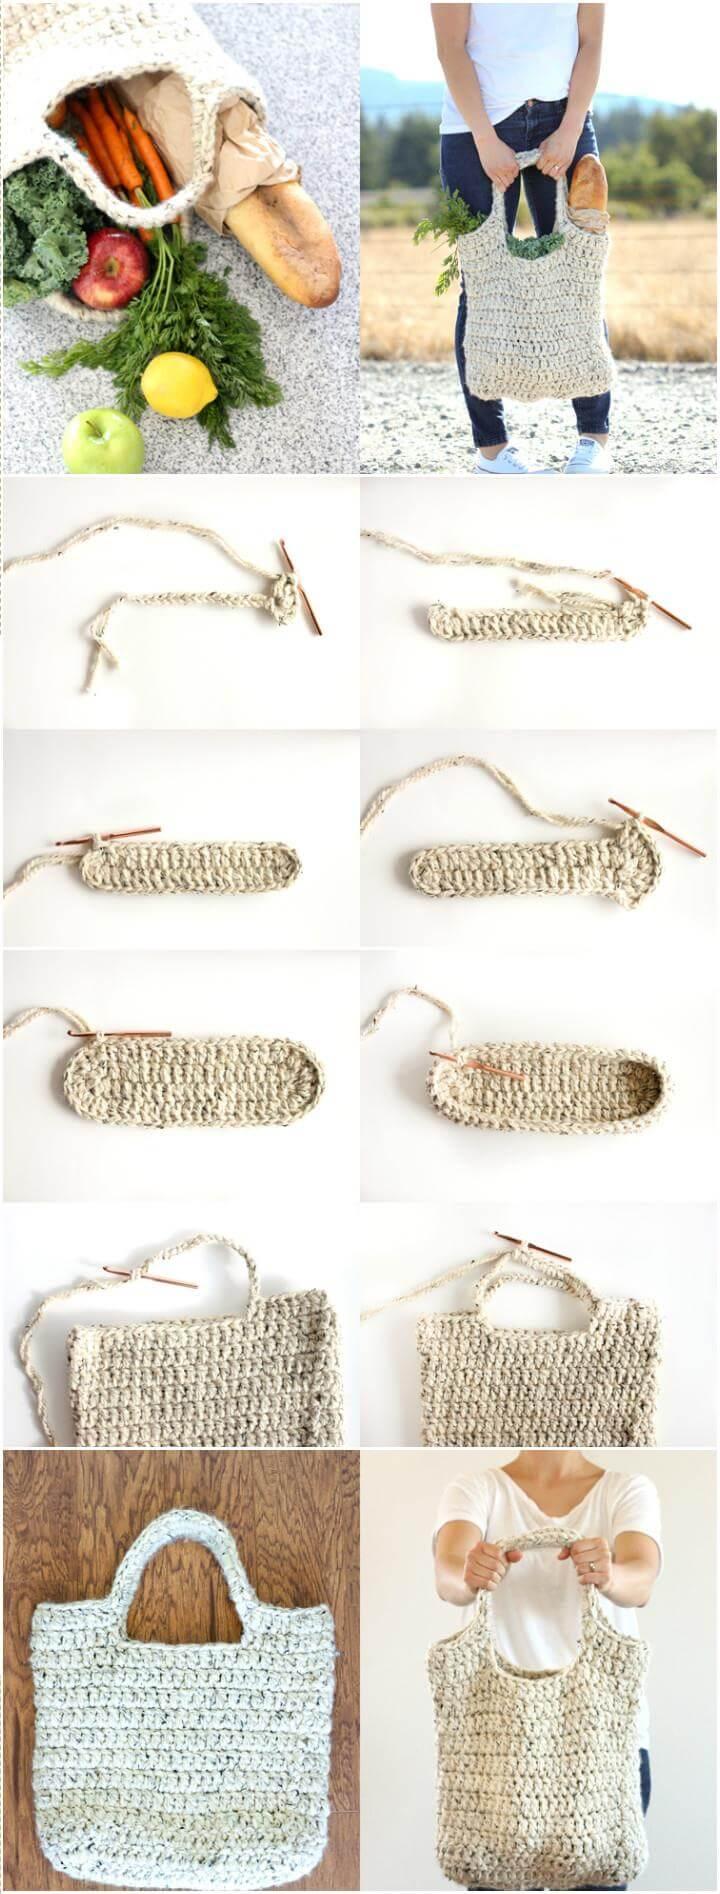 easy crochet marketing shopping tote pattern